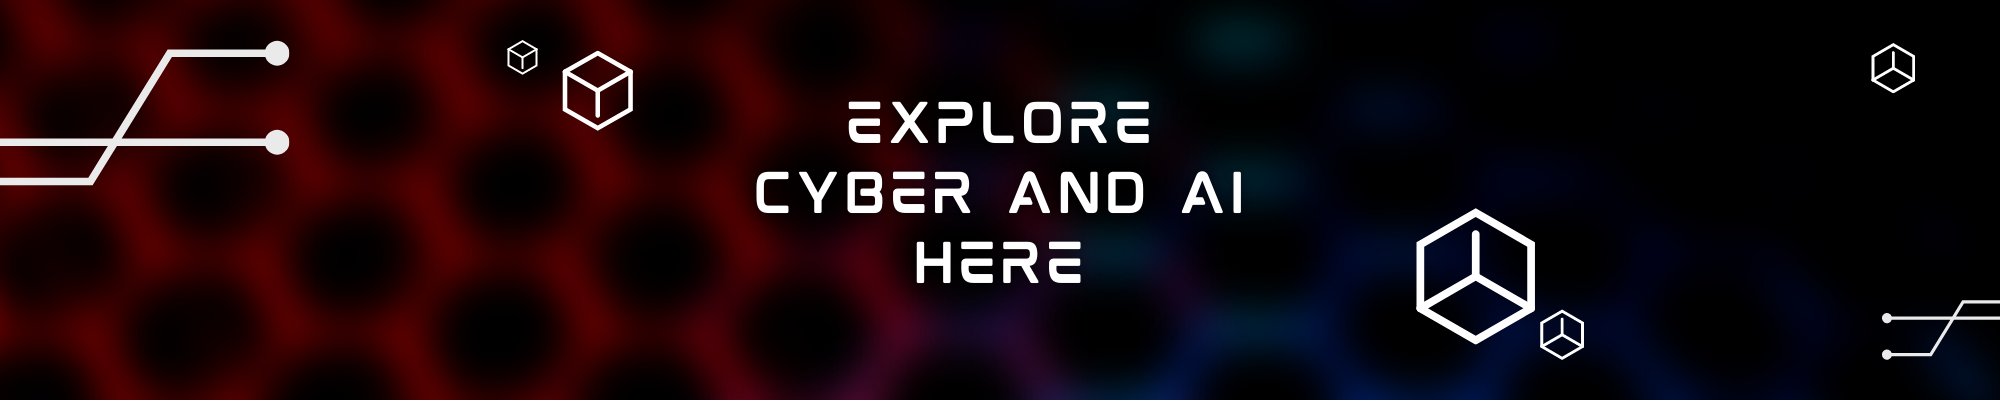 explore cyber and ai